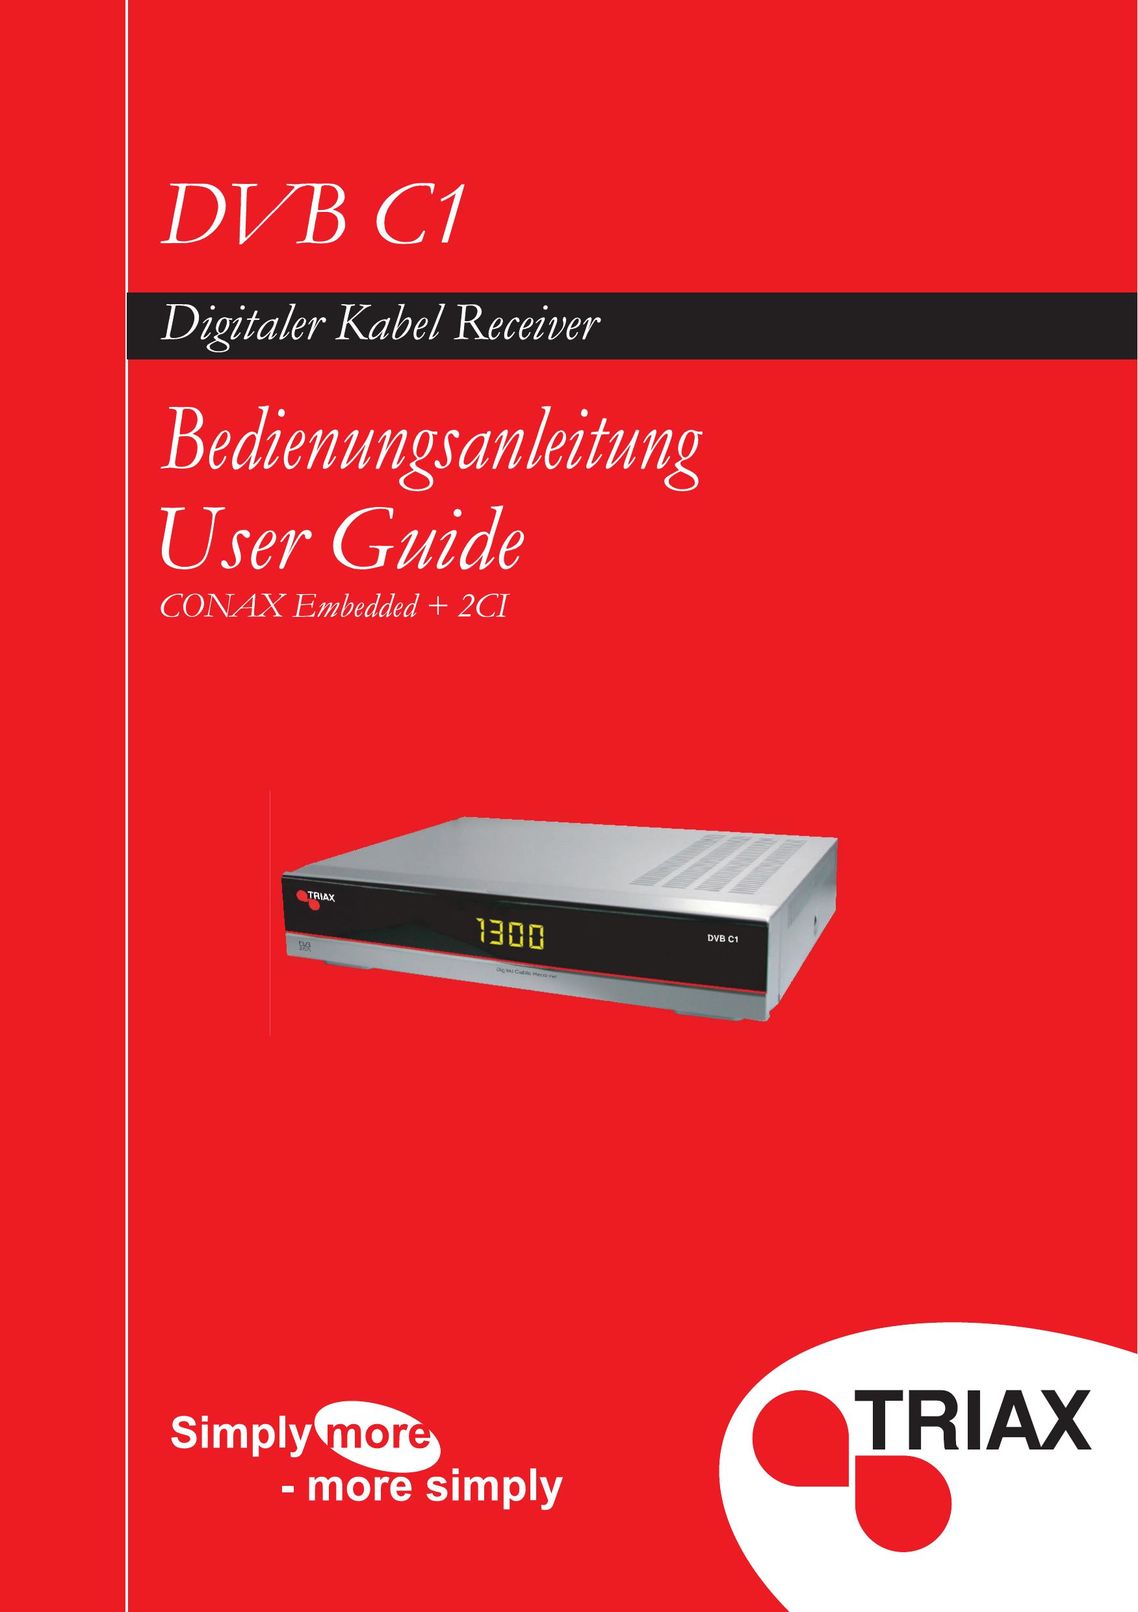 Triax DVB C1 Stereo Receiver User Manual